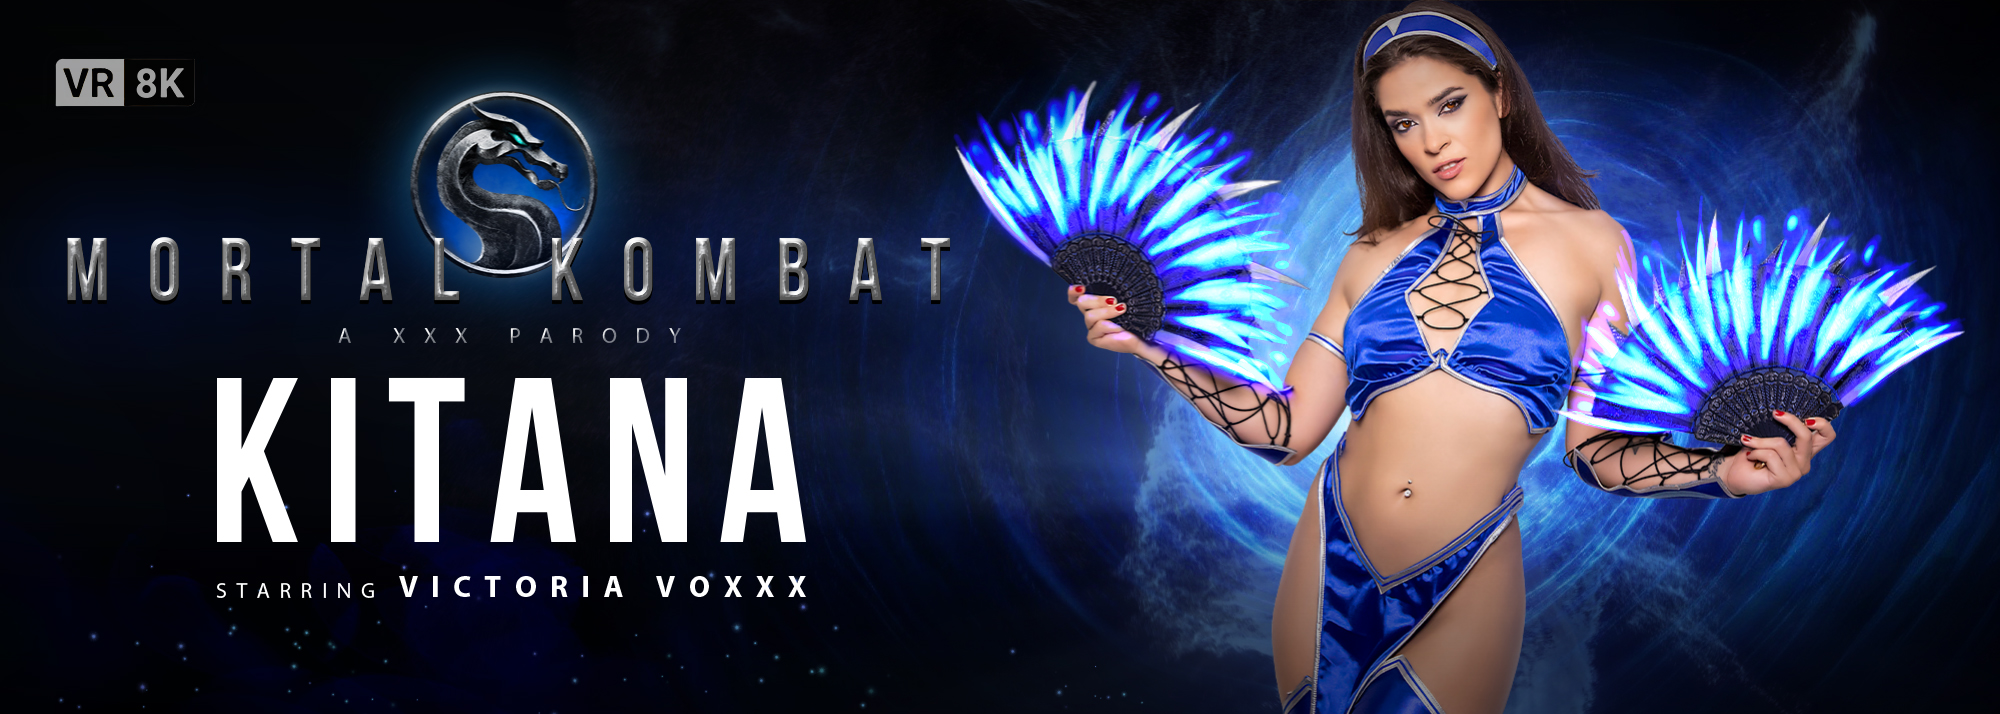 Mortal Kombat: Kitana (A XXX Parody) - VR Porn Video, Starring Victoria Voxxx VR